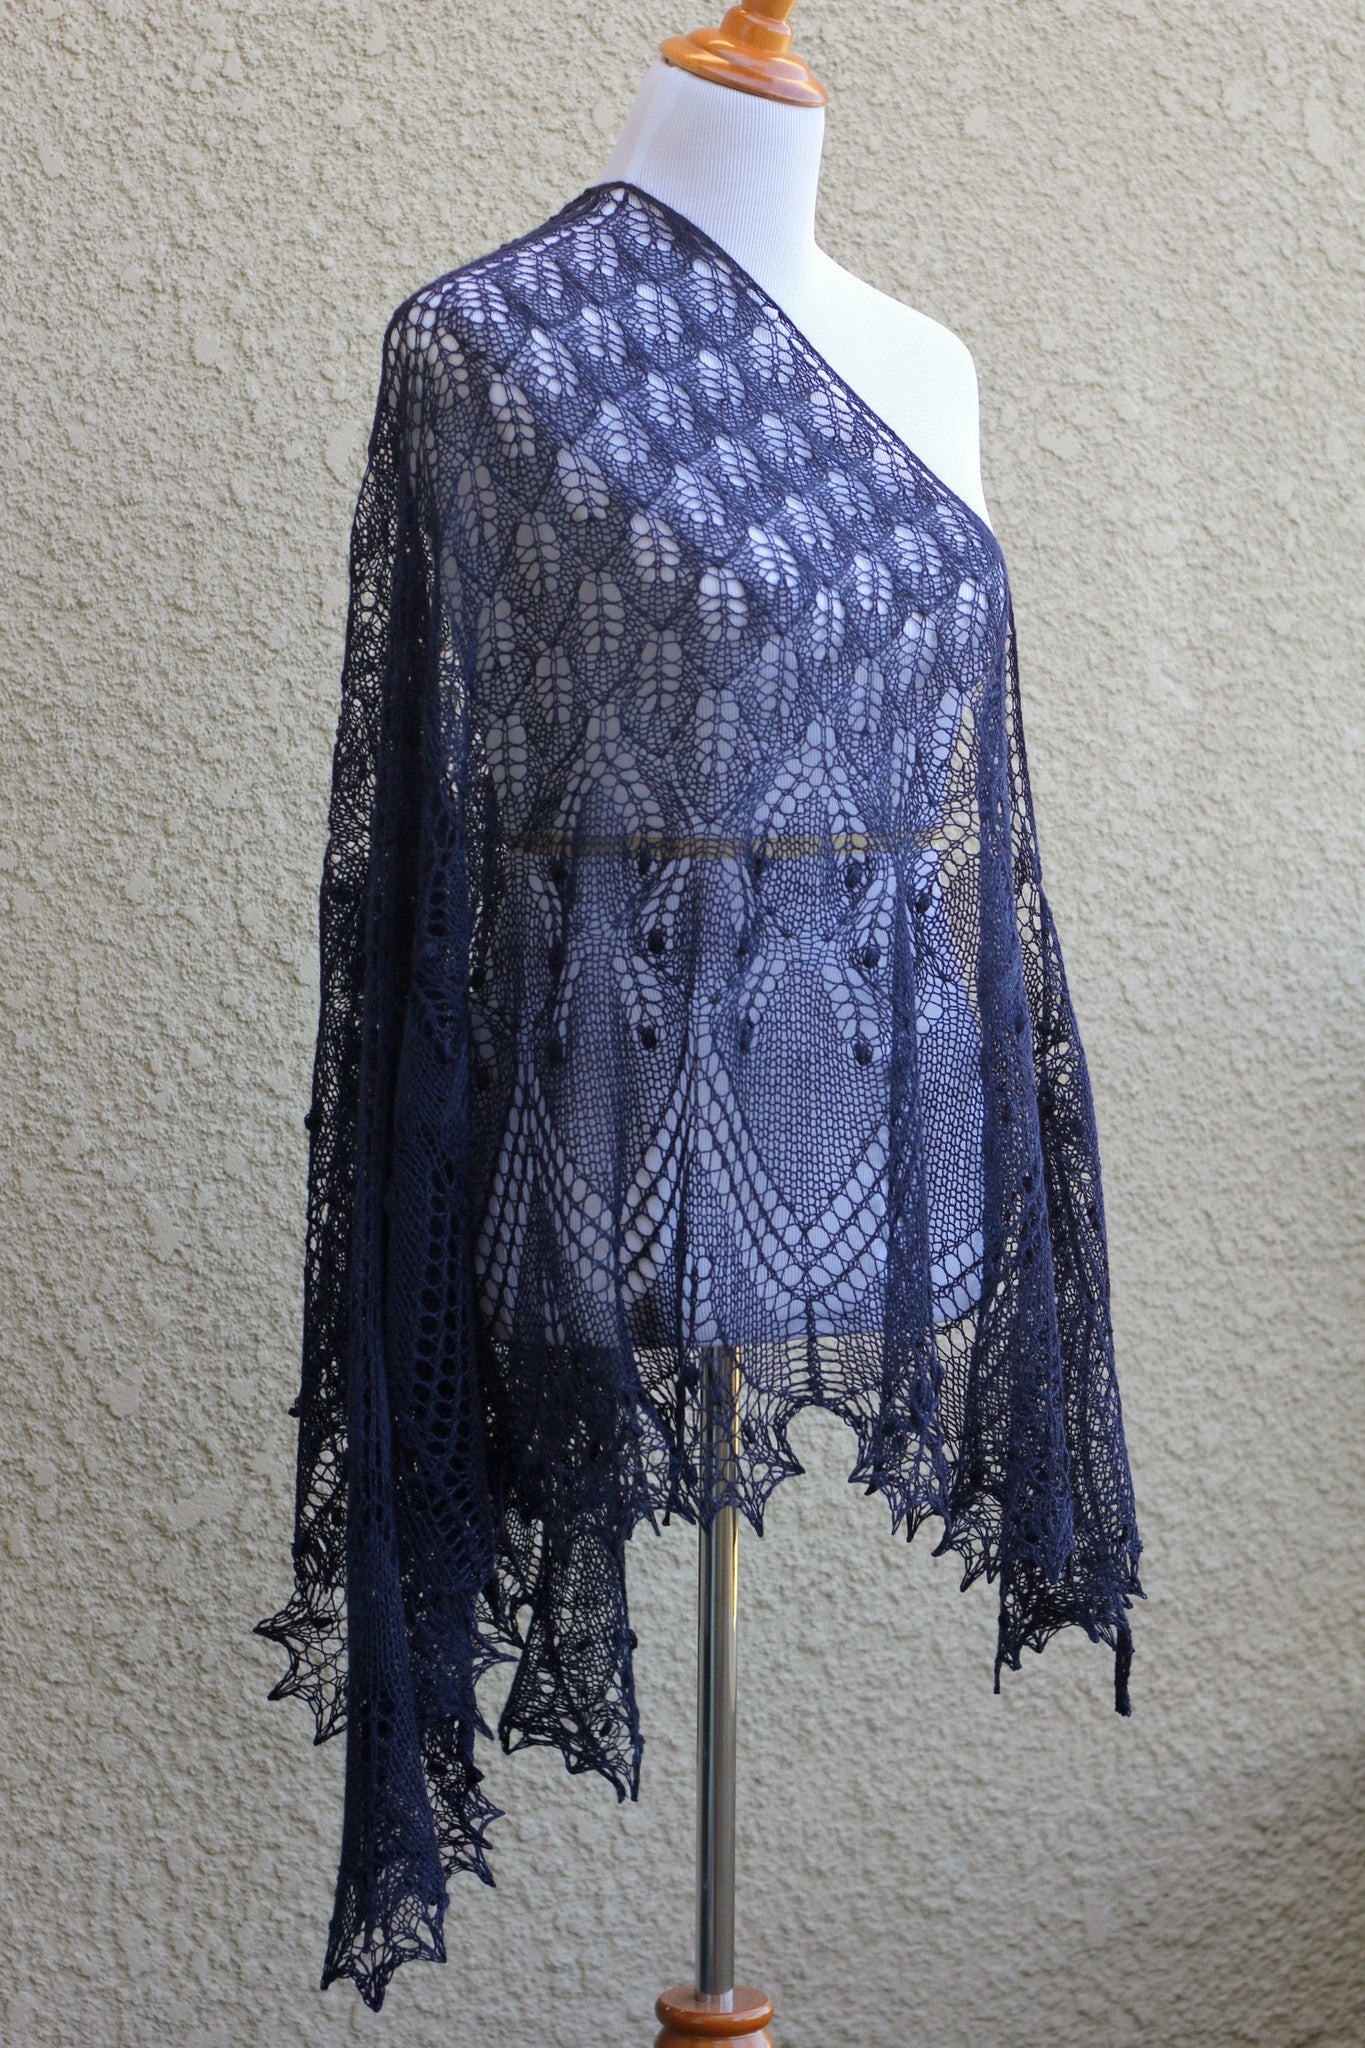 Knit shawl for women